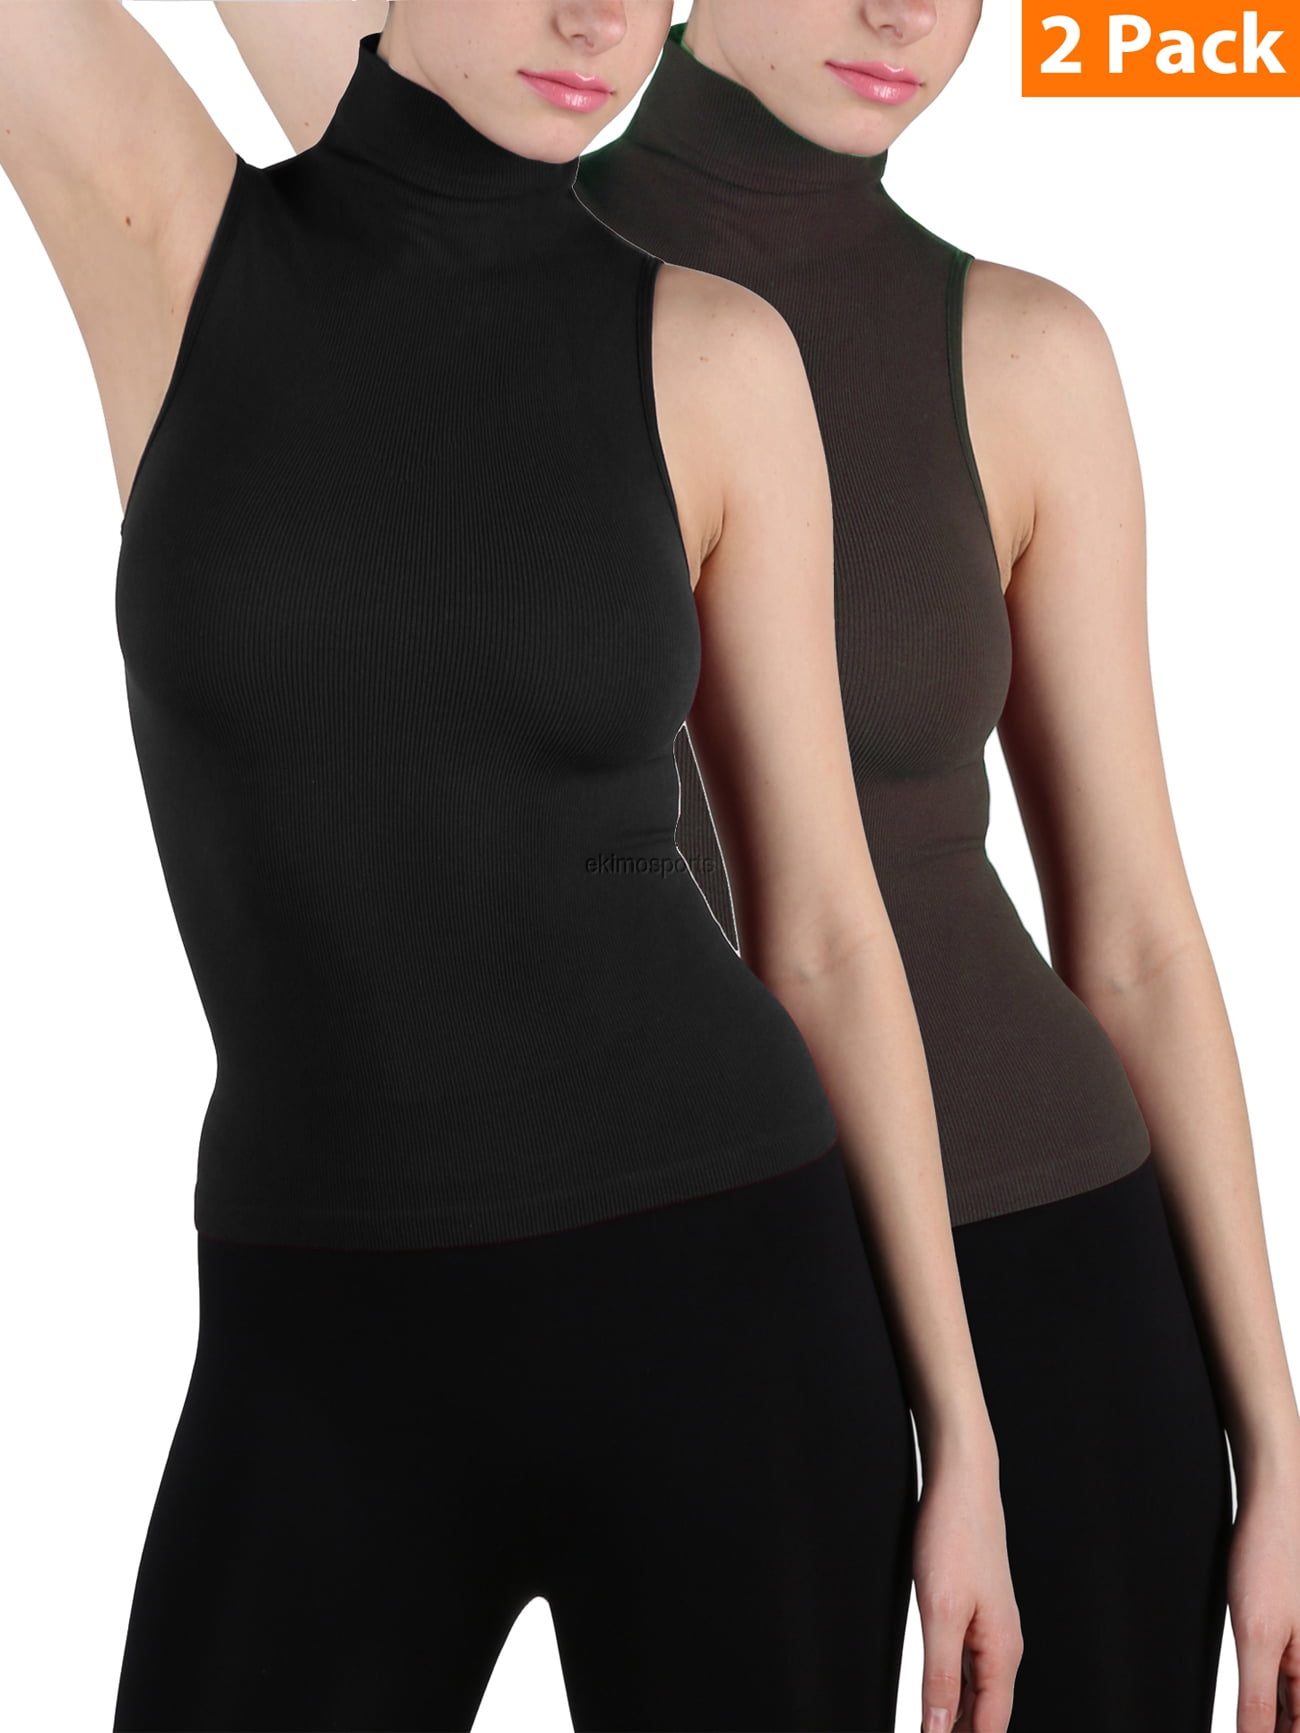 WUAI-Women Sleeveless Slim Fit Turtleneck Mock T-Shirt Tank Tops Basic Comfy Soft Shirts Blouse Vests 